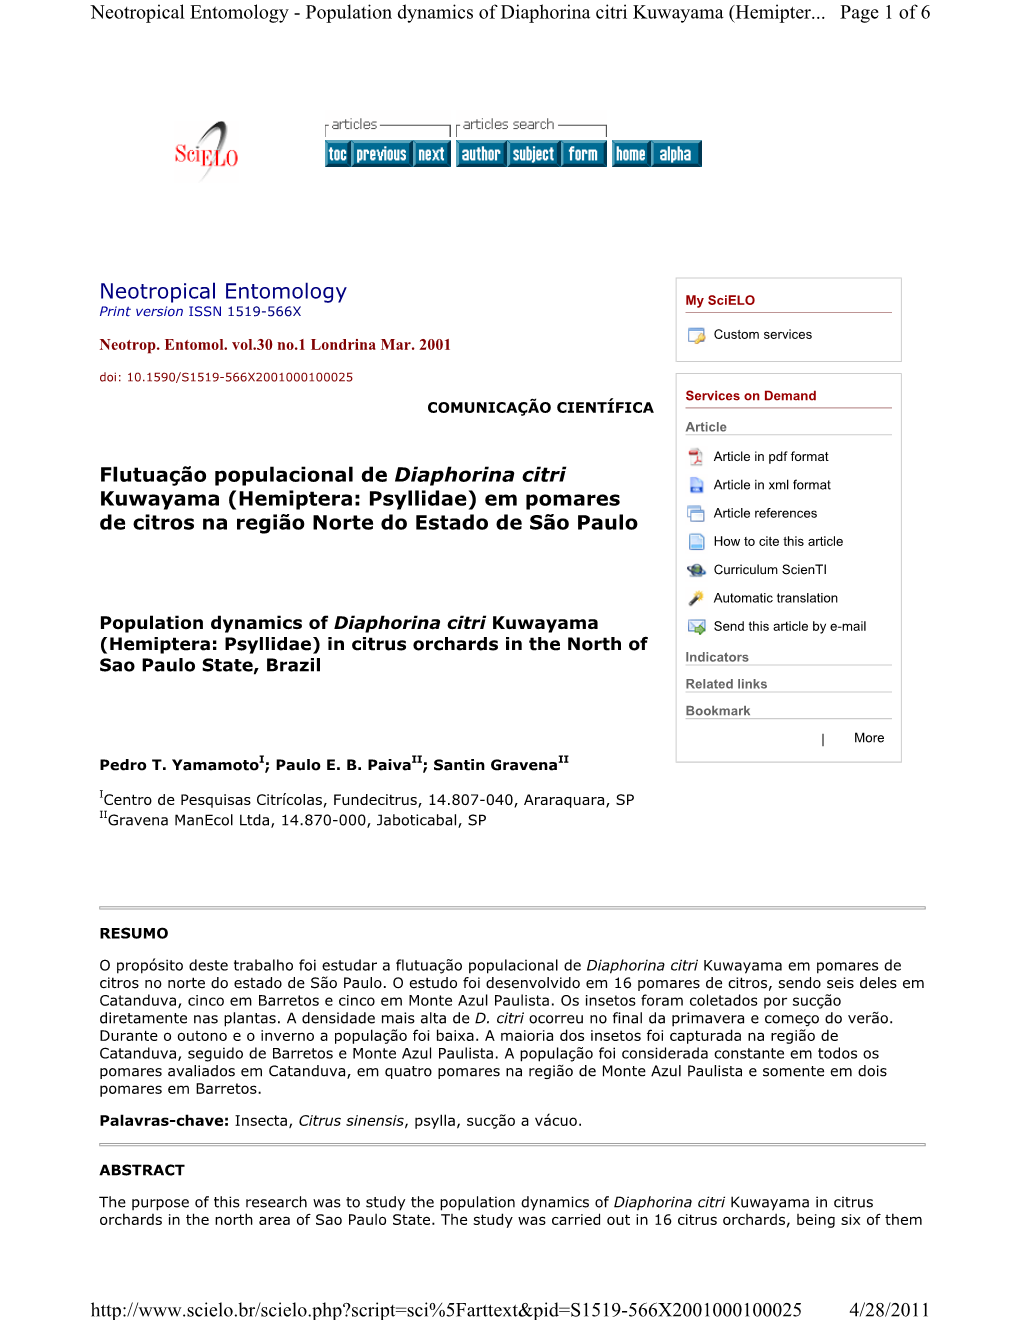 Population Dynamics of Diaphorina Citri Kuwayama (Hemipter... 4/28/2